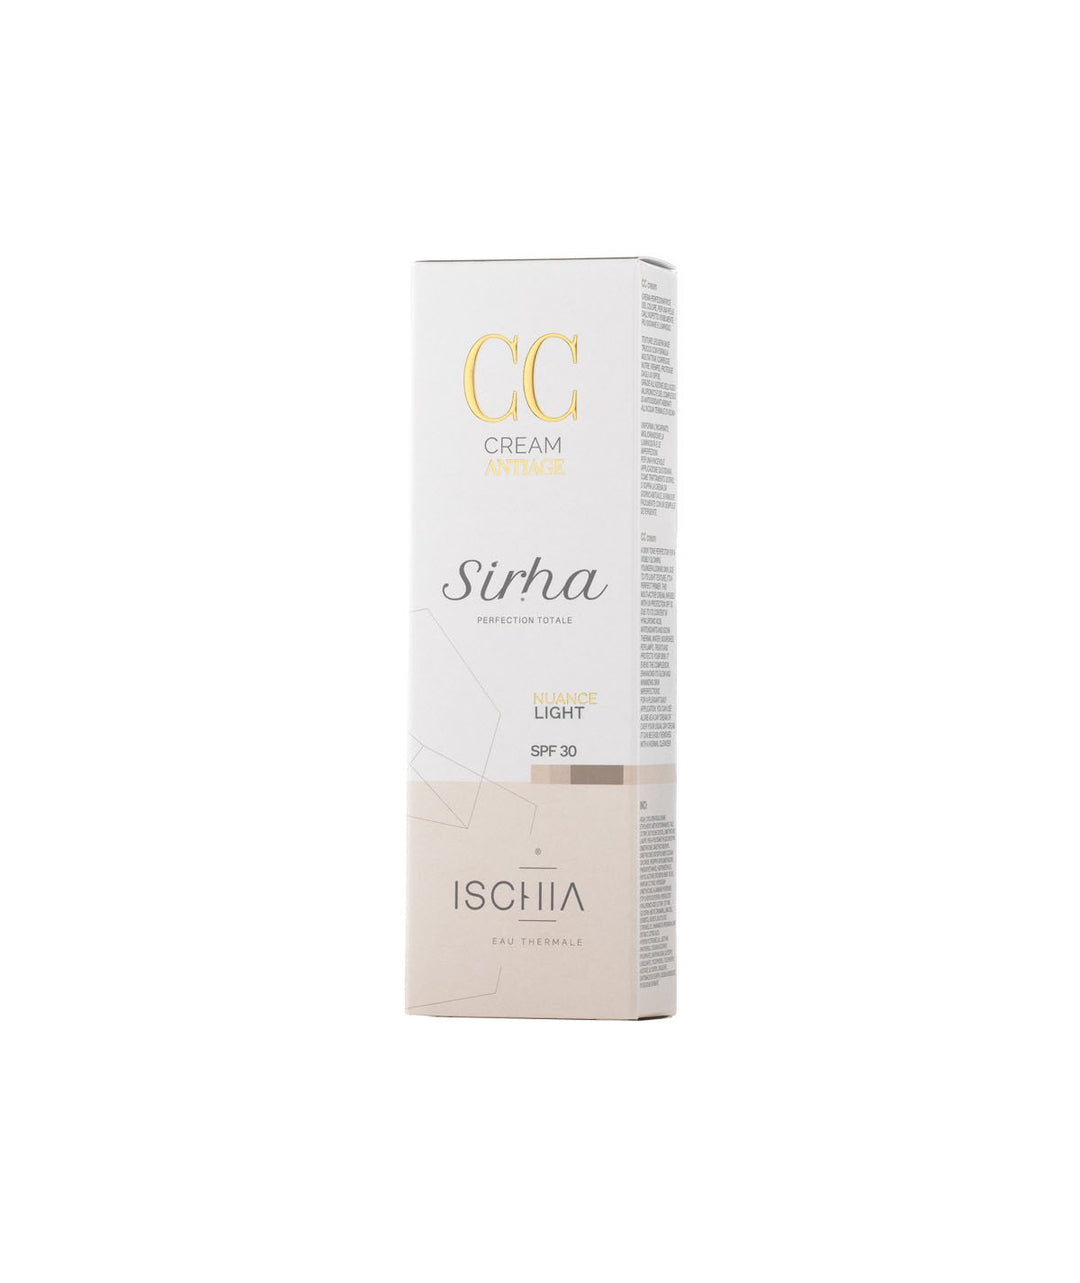 

Ischia Thermal Water Sirha CC Cream Anti-aging 30 ml